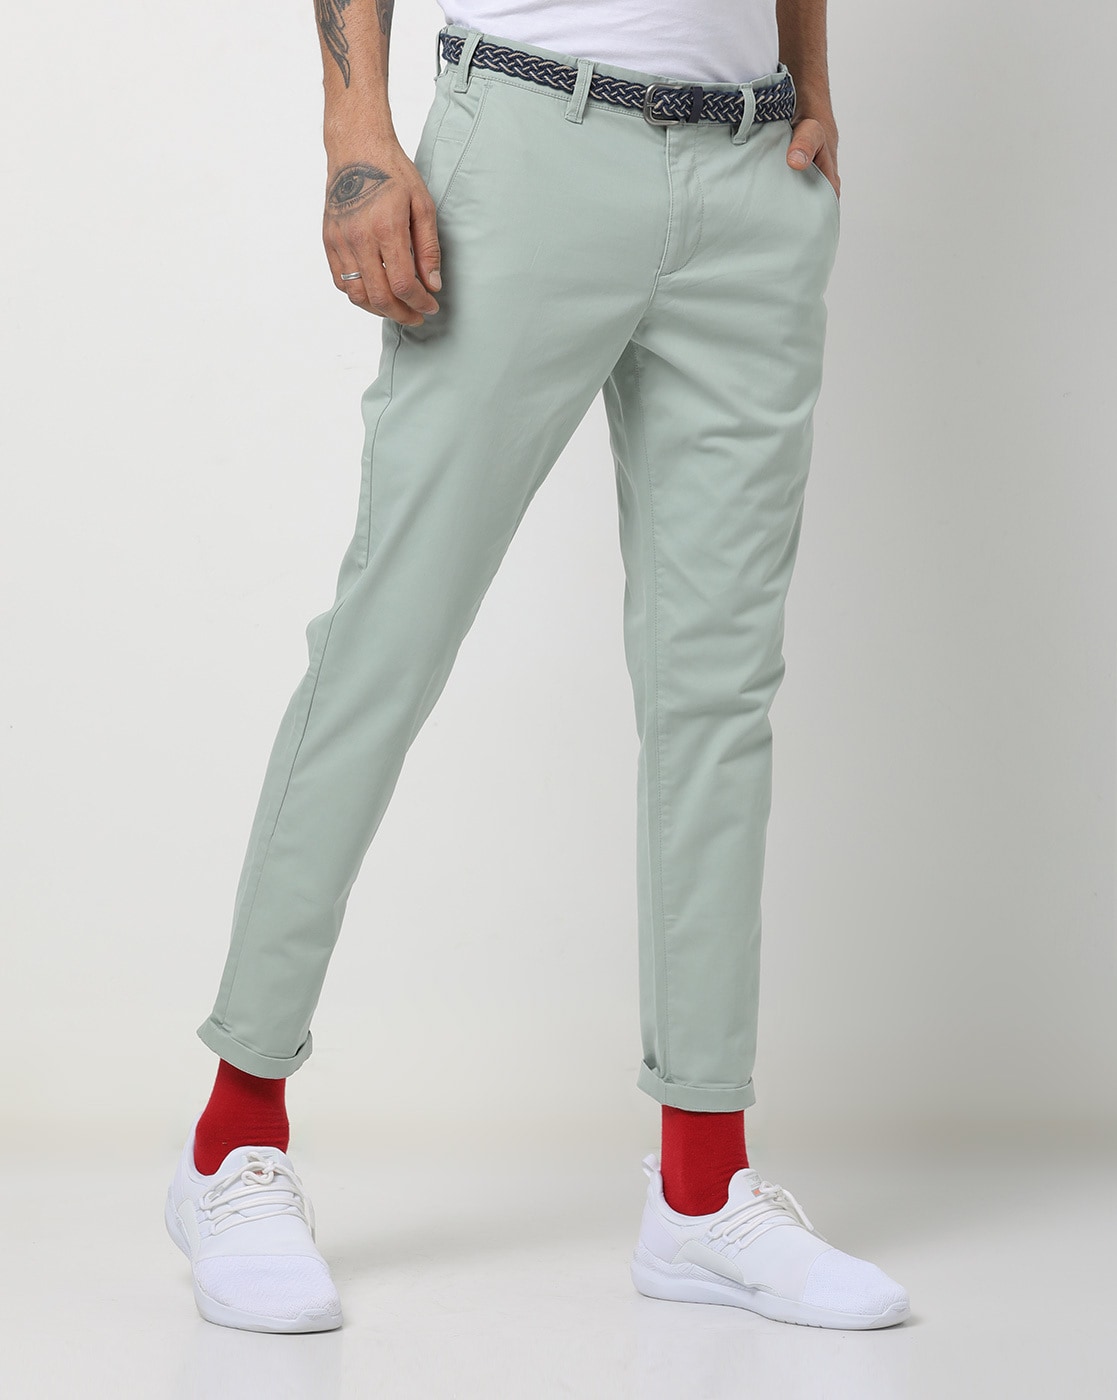 Style Hook Polyster Blend Formal Trousers For Man regular fit formal pants  light grey colour